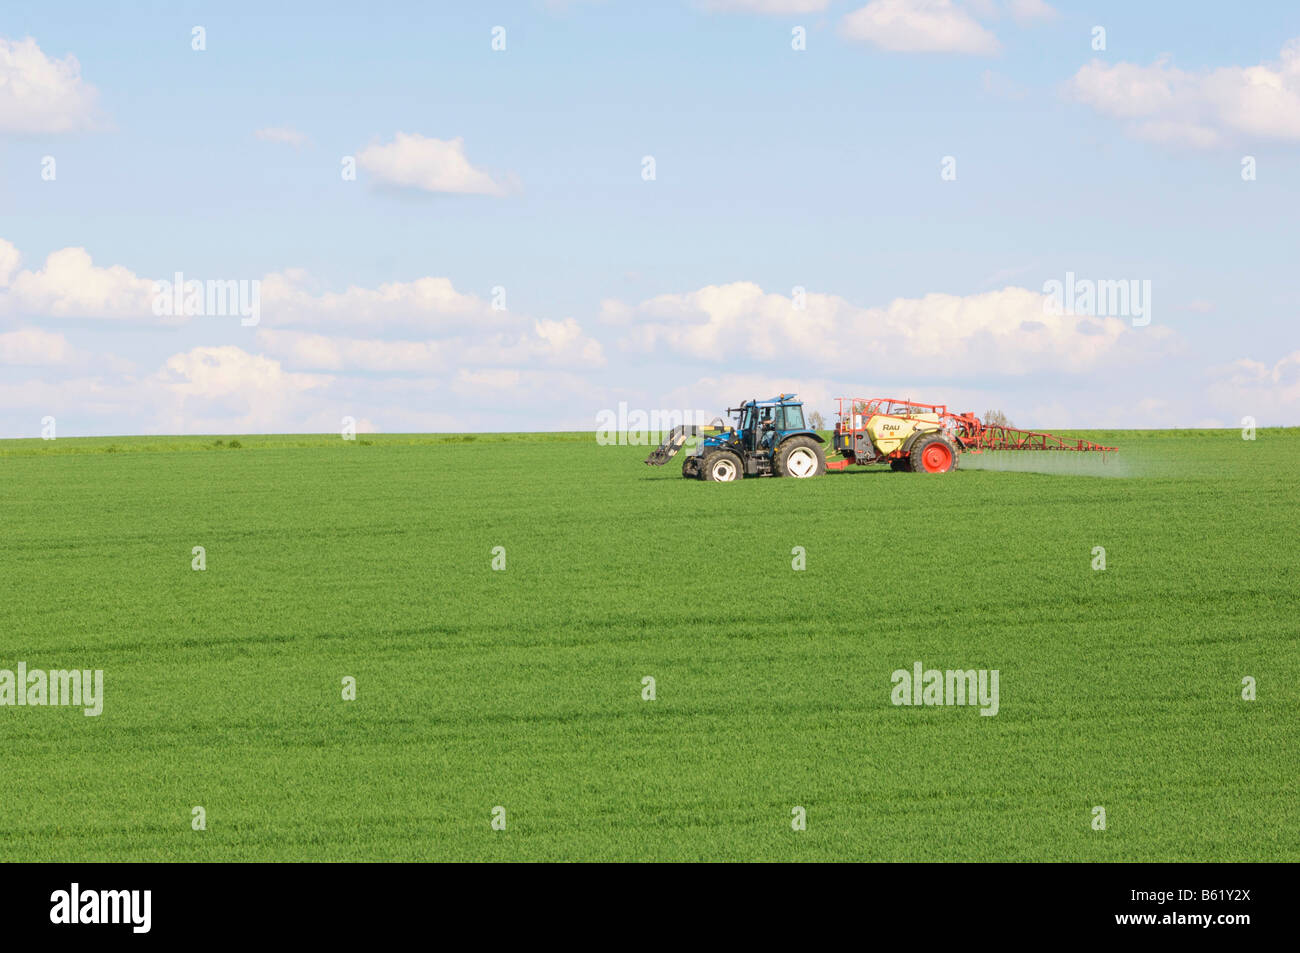 Agricultural landscape, tractor spraying fertiliser Stock Photo